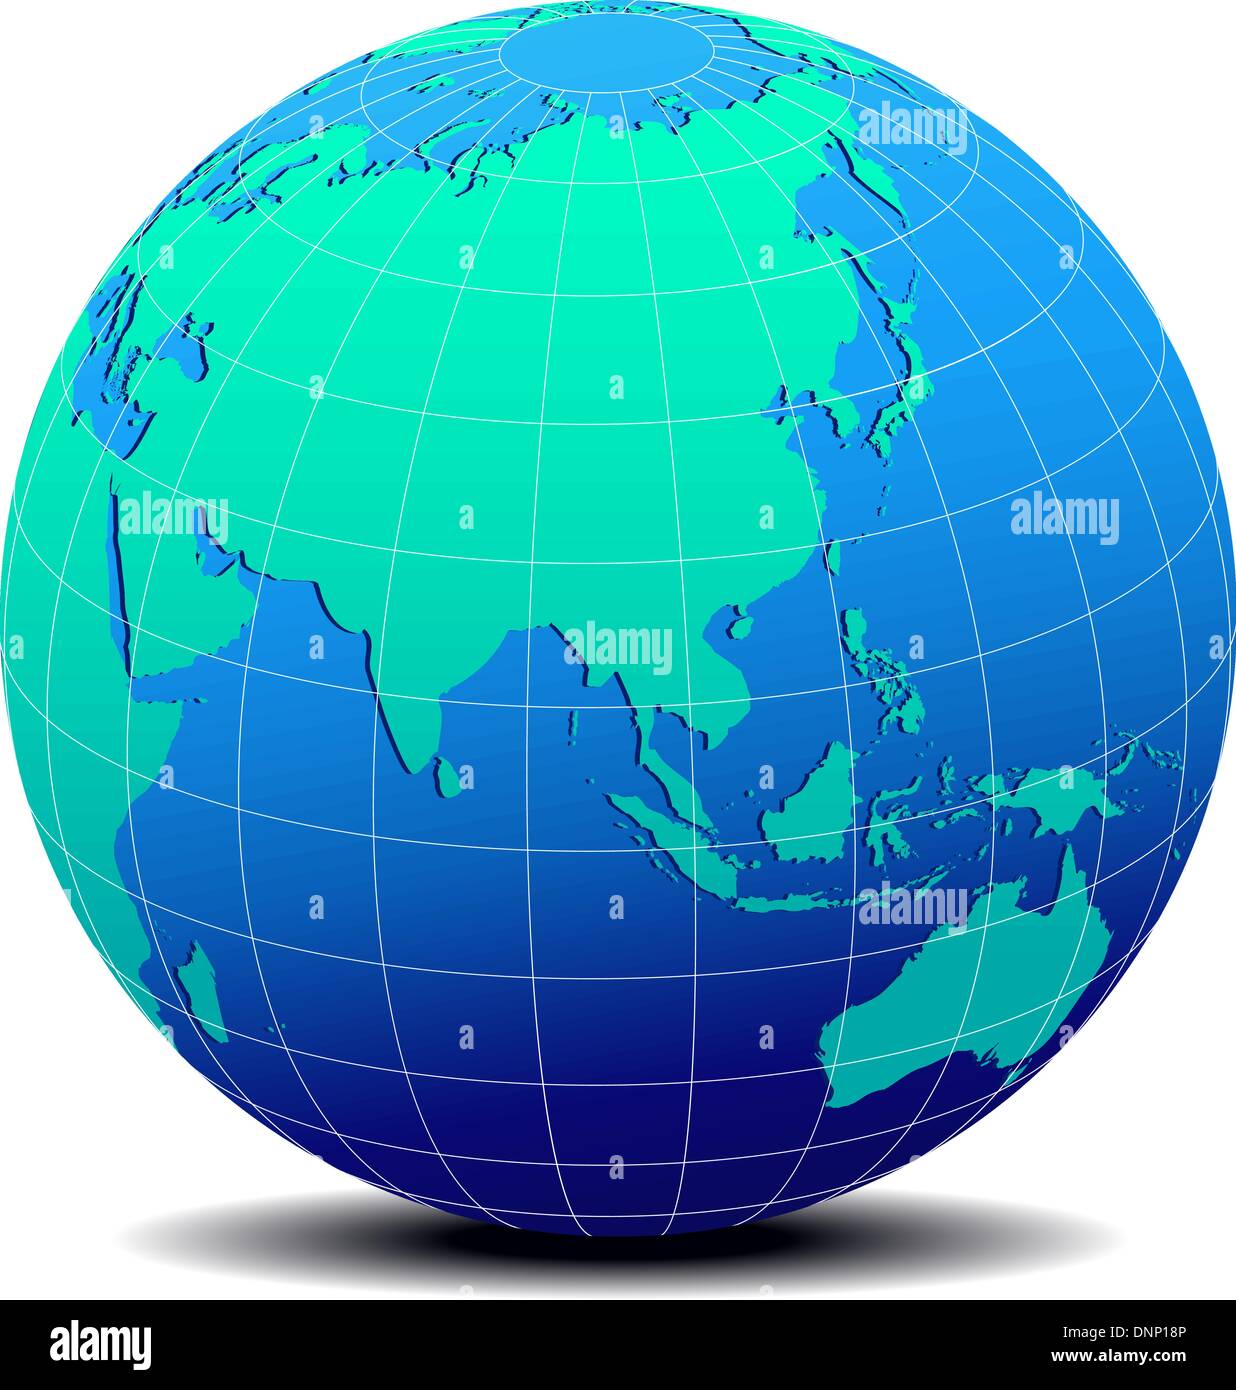 Vektor-Kartensymbol der Welt im Globe Form - Asien - China, Malaysia, Philippinen Stock Vektor